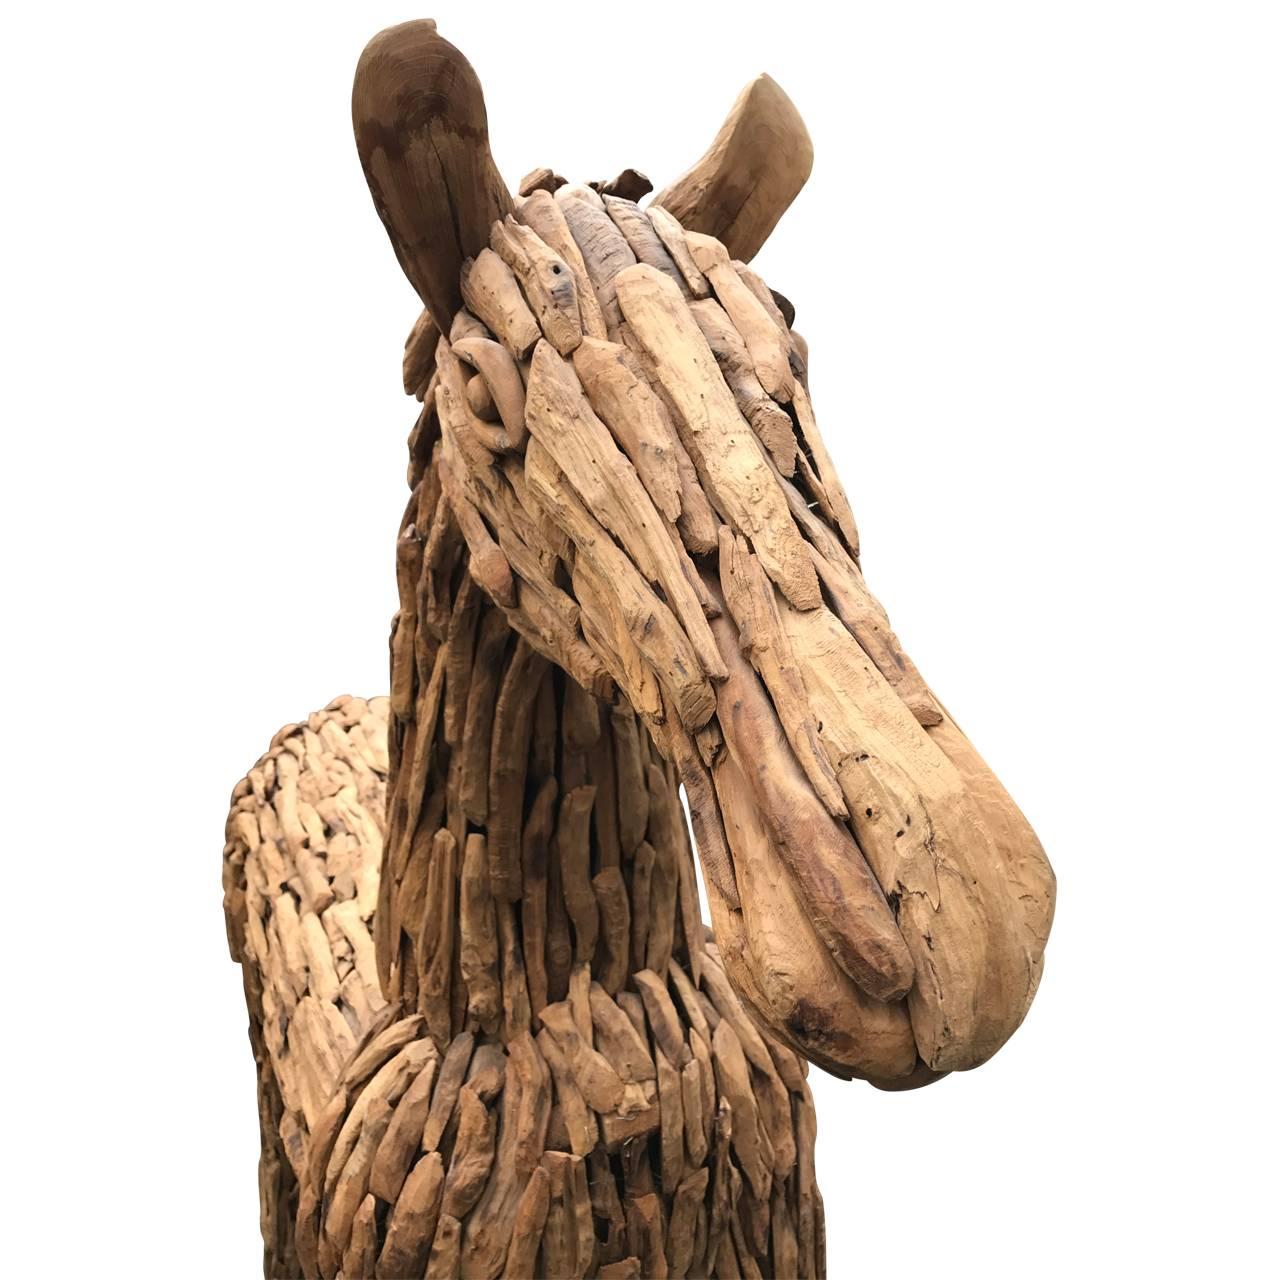 American Craftsman Lifesize Reclaimed Wood Equine Sculpture